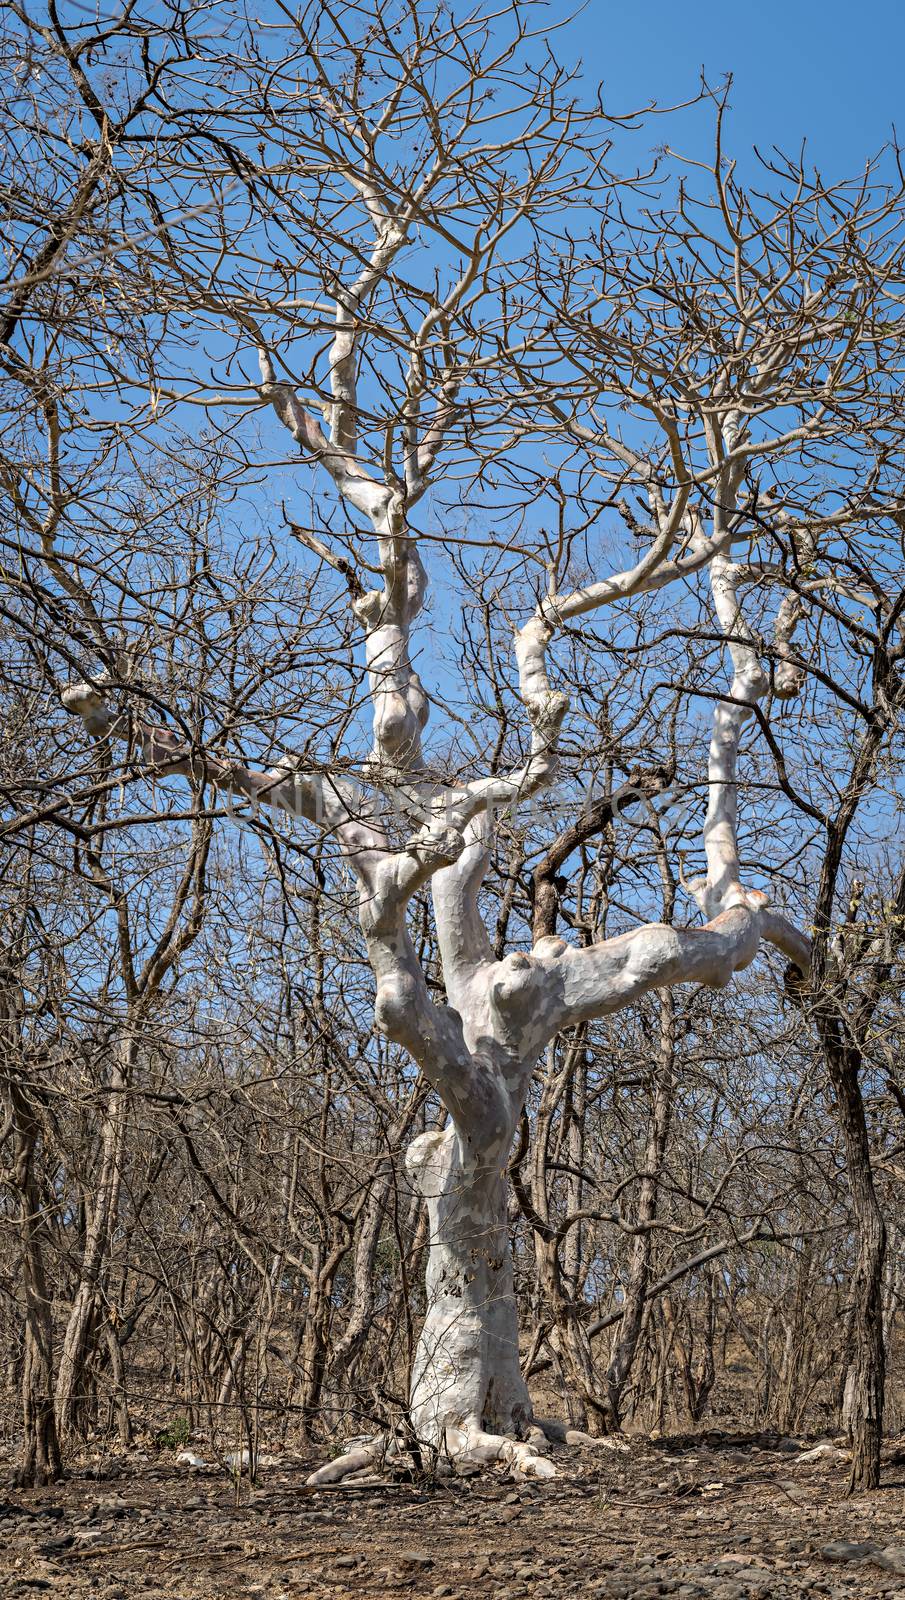 Dry gum or rubber tree at Sasan gir jungle, Gujrat, India.